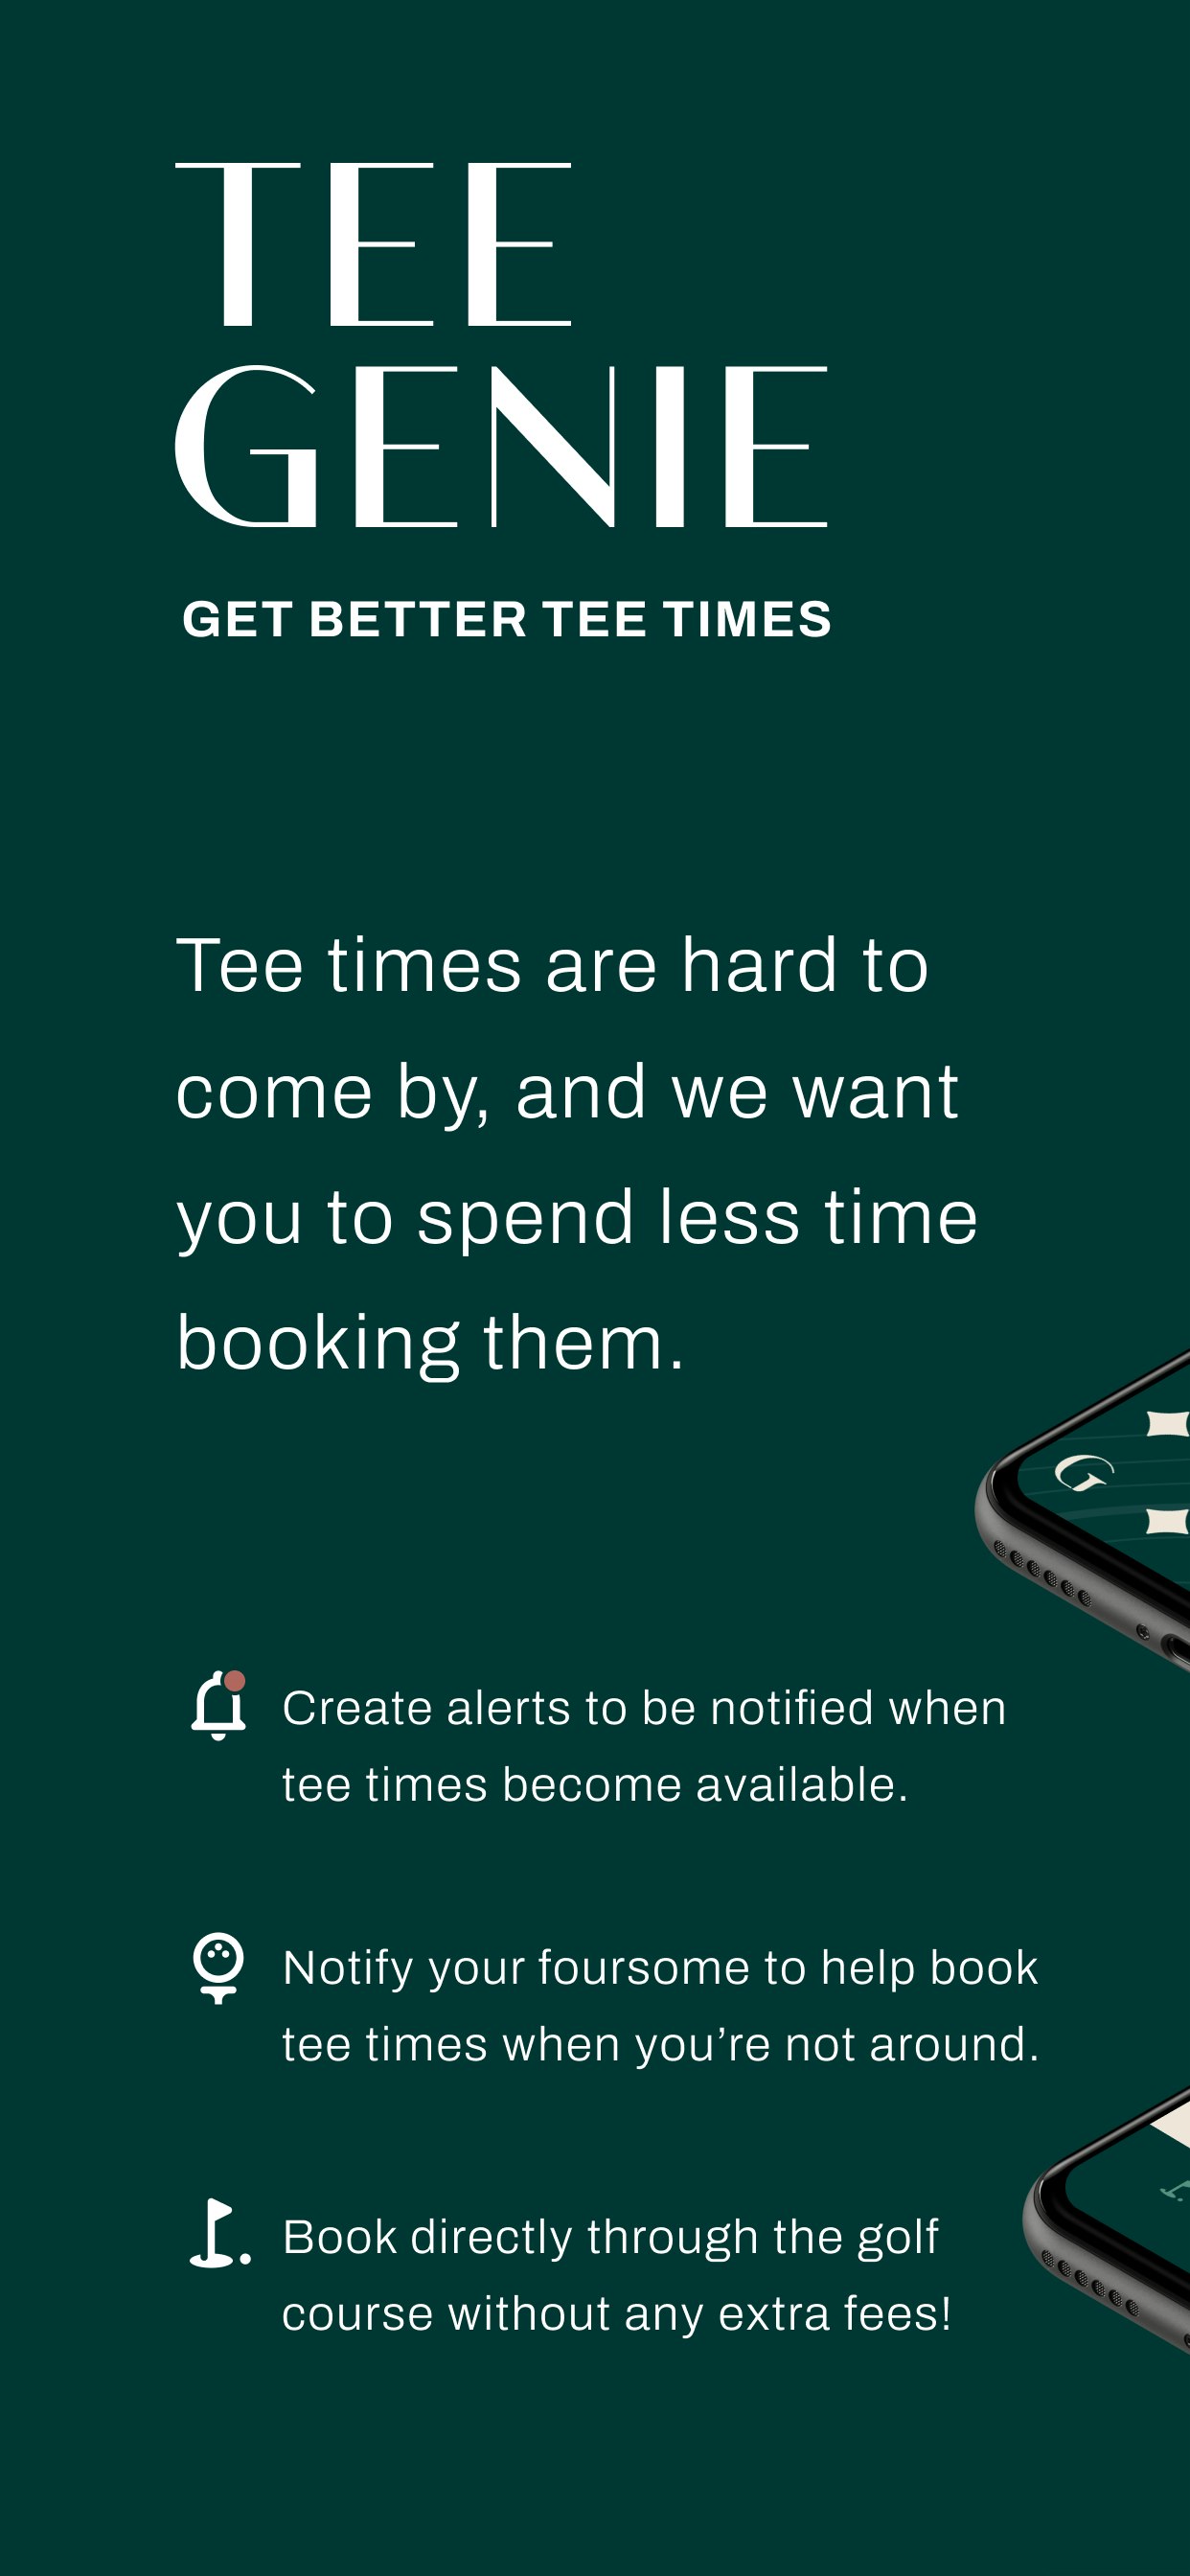 startuptile Tee Genie-Helping Golfers Get Better Tee Times